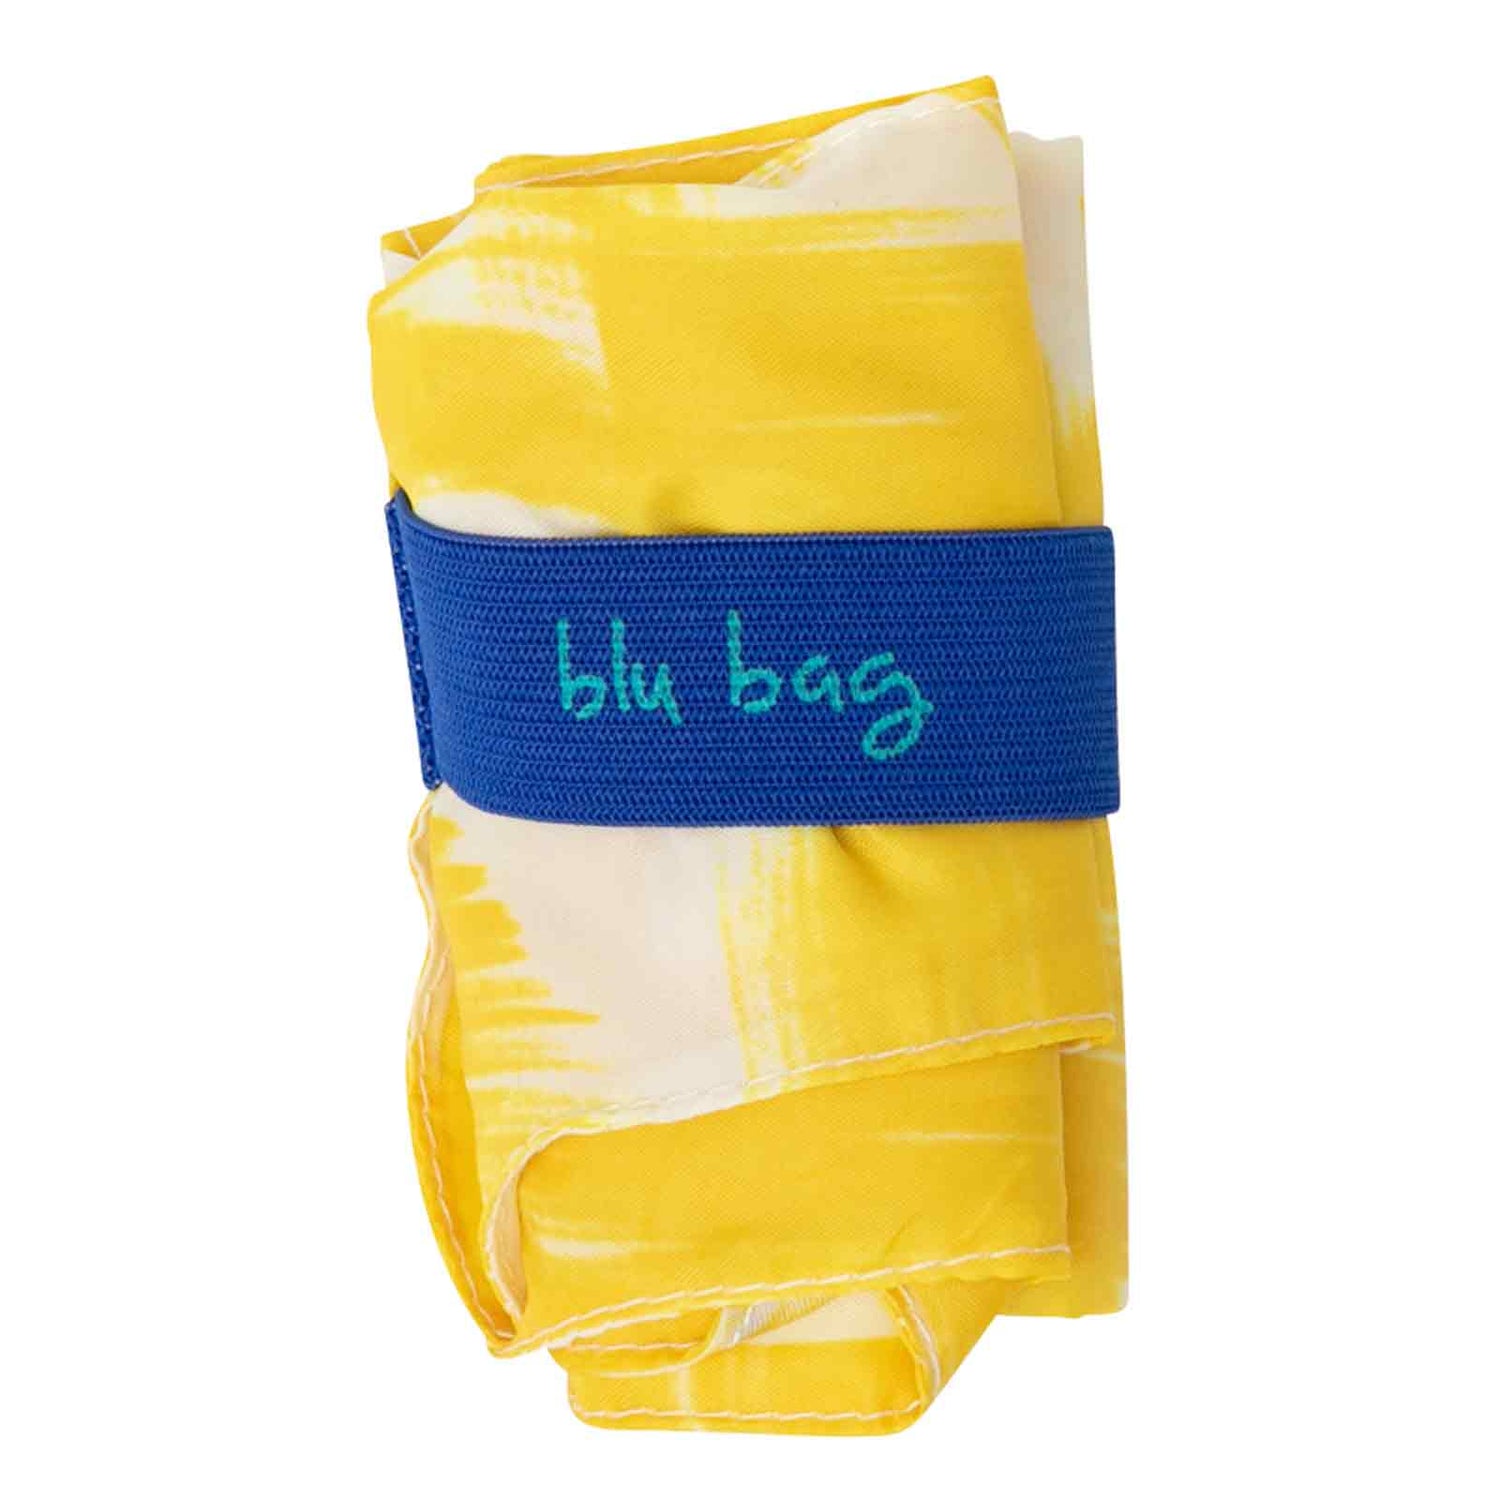 Thea Yellow Blu Bag Reusable Shopping Bag - Machine Washable Reusable Shopping Bag - rockflowerpaper